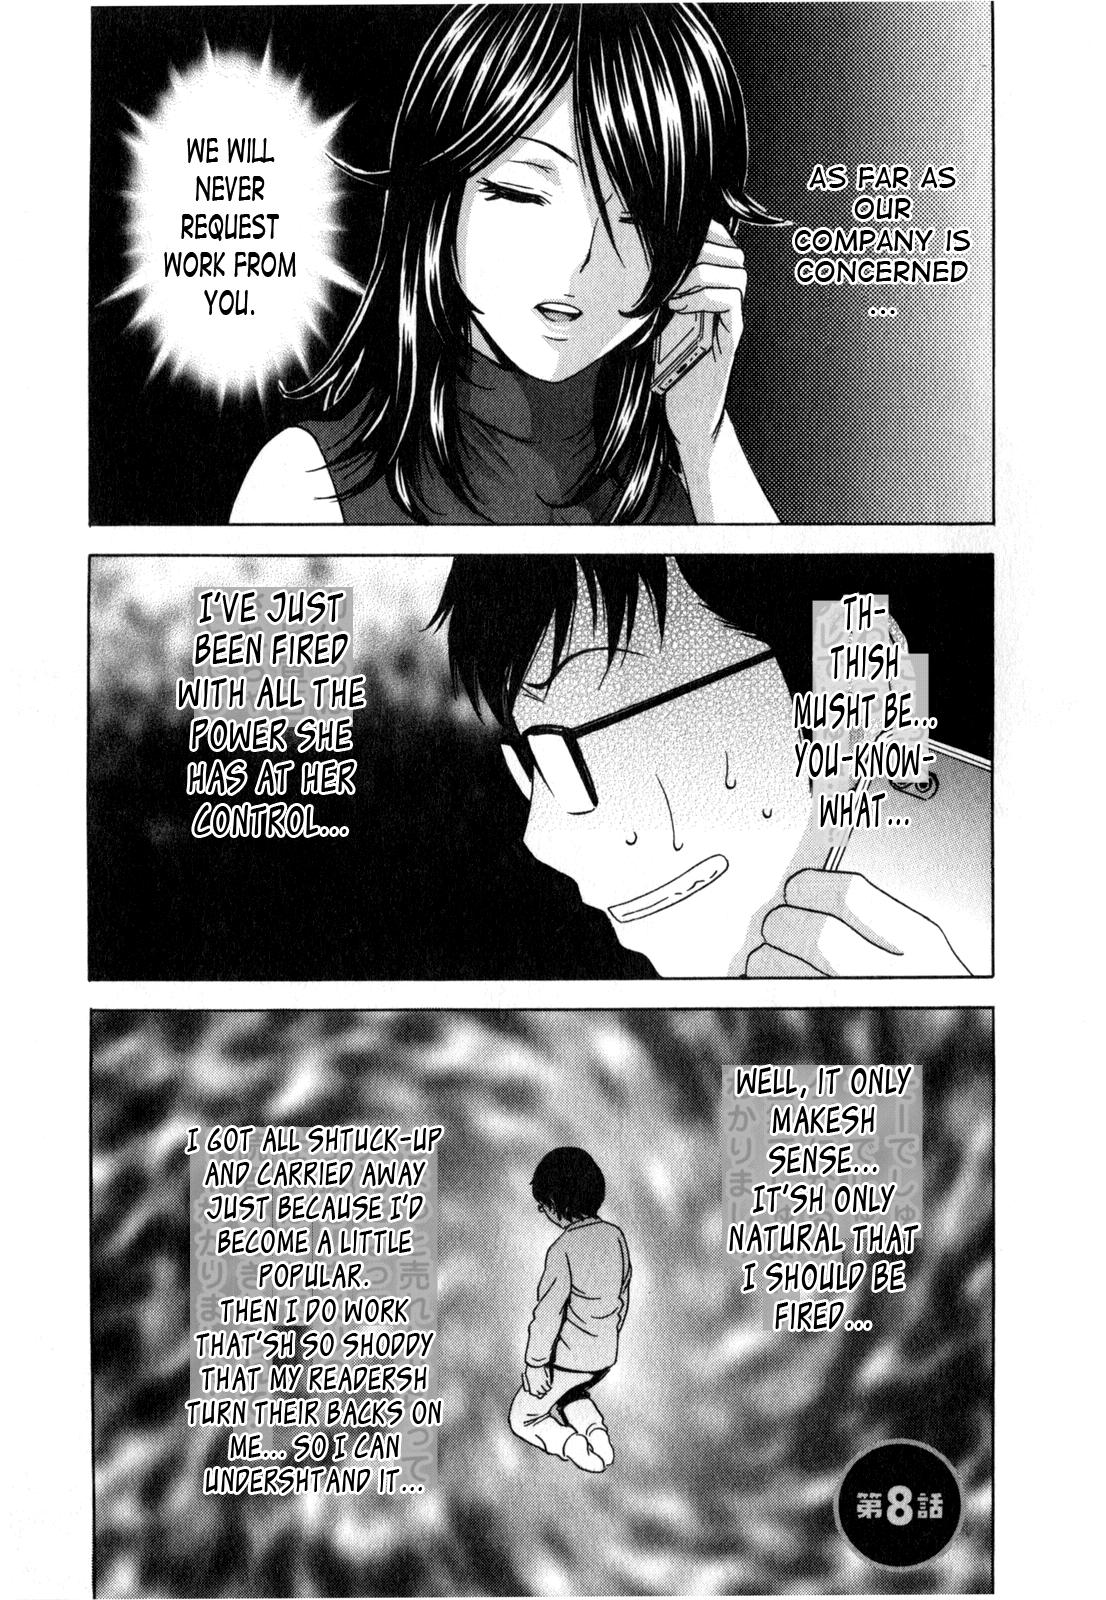 Life with Married Women Just Like a Manga 3 140